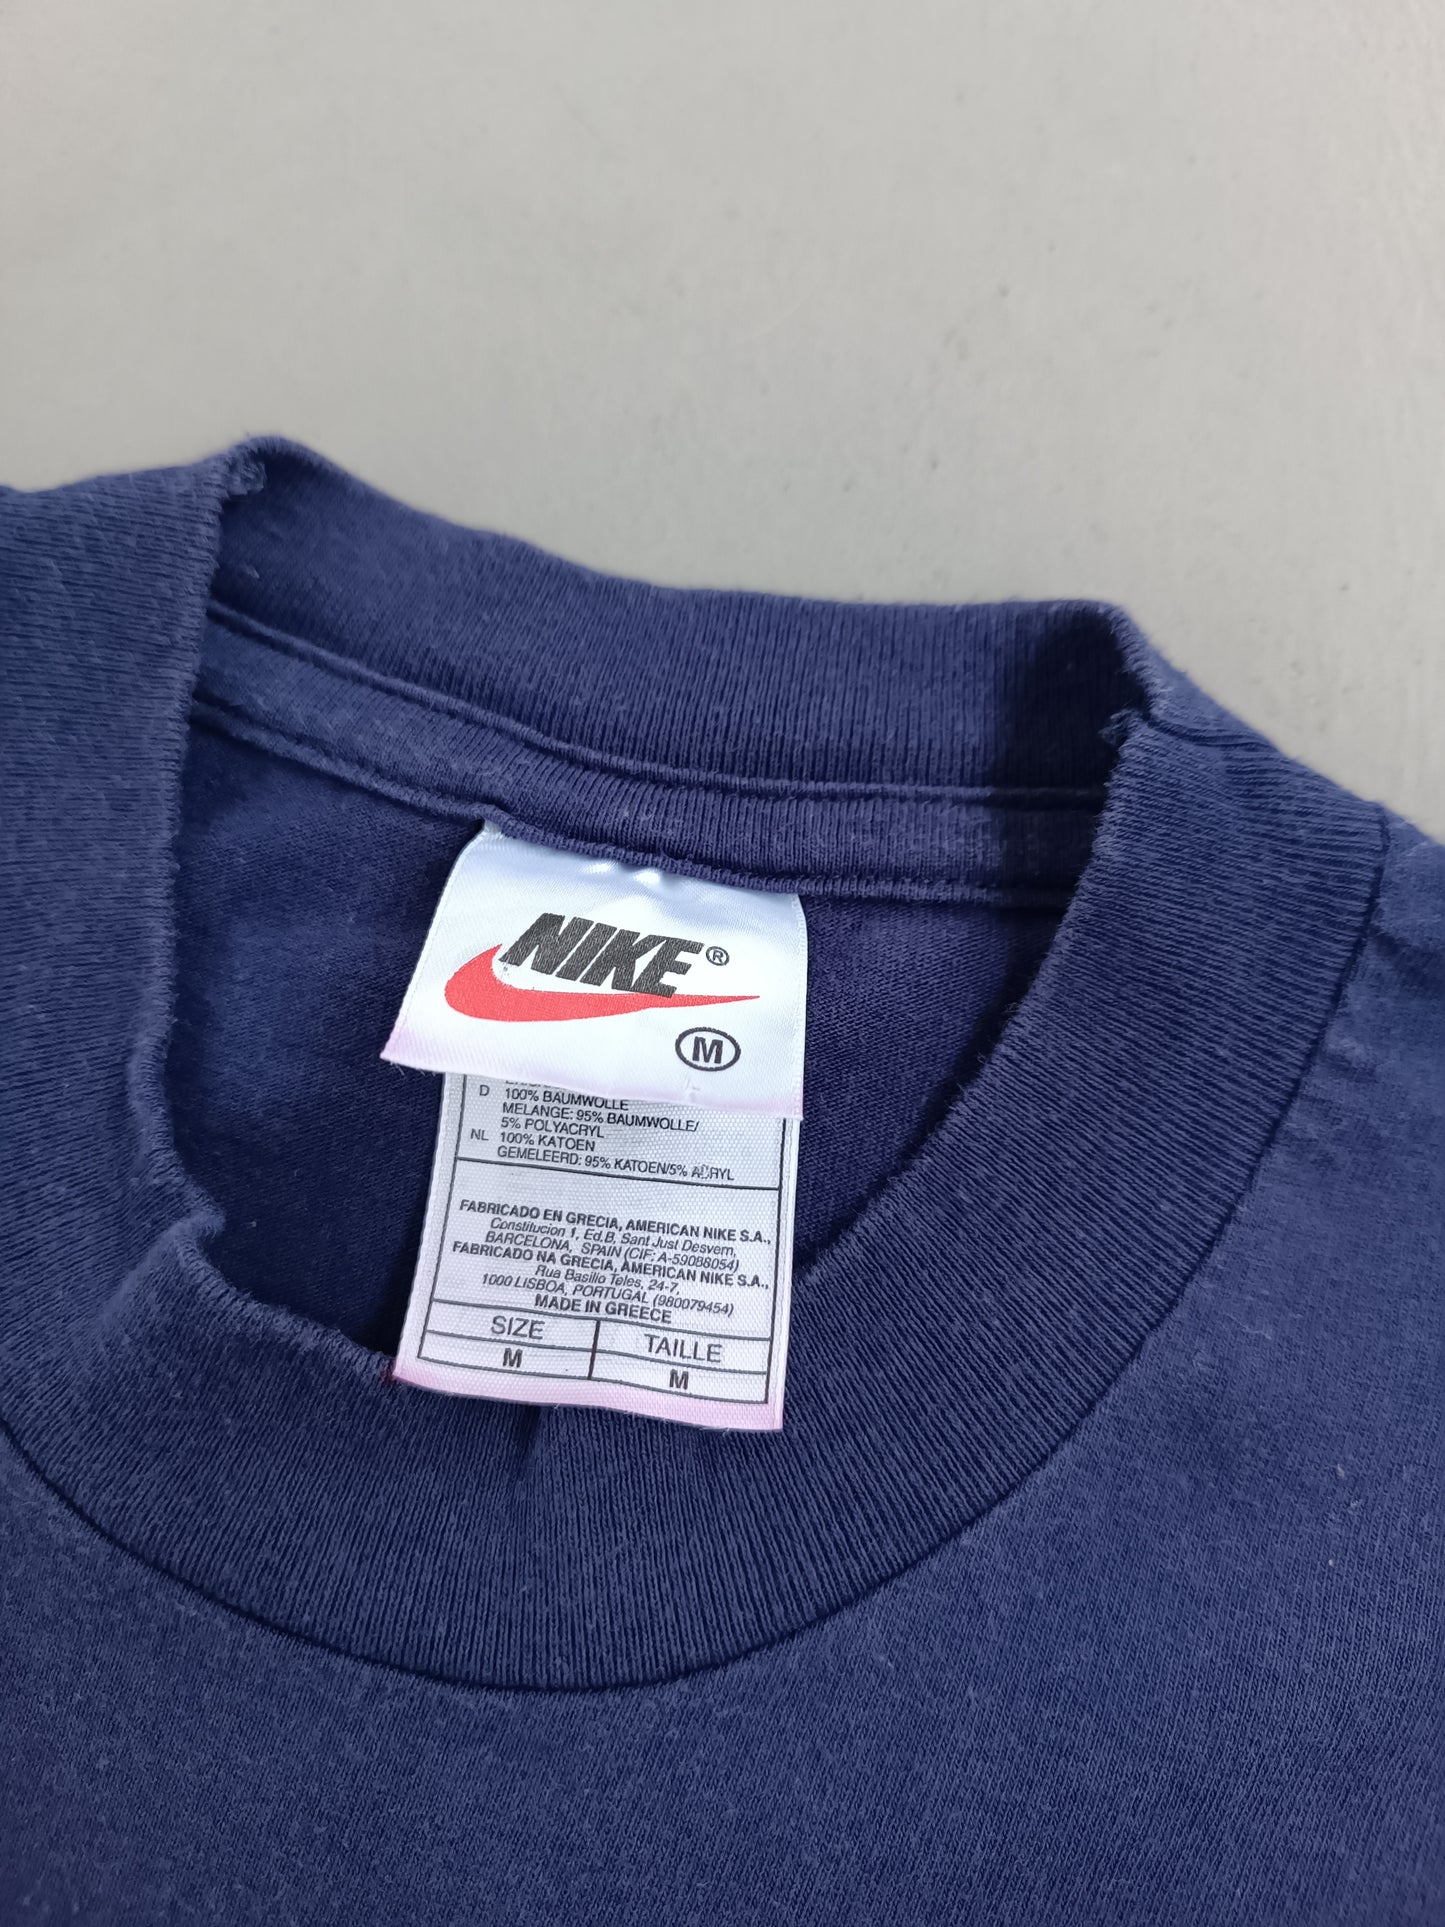 Nike Air Single Stitched - M